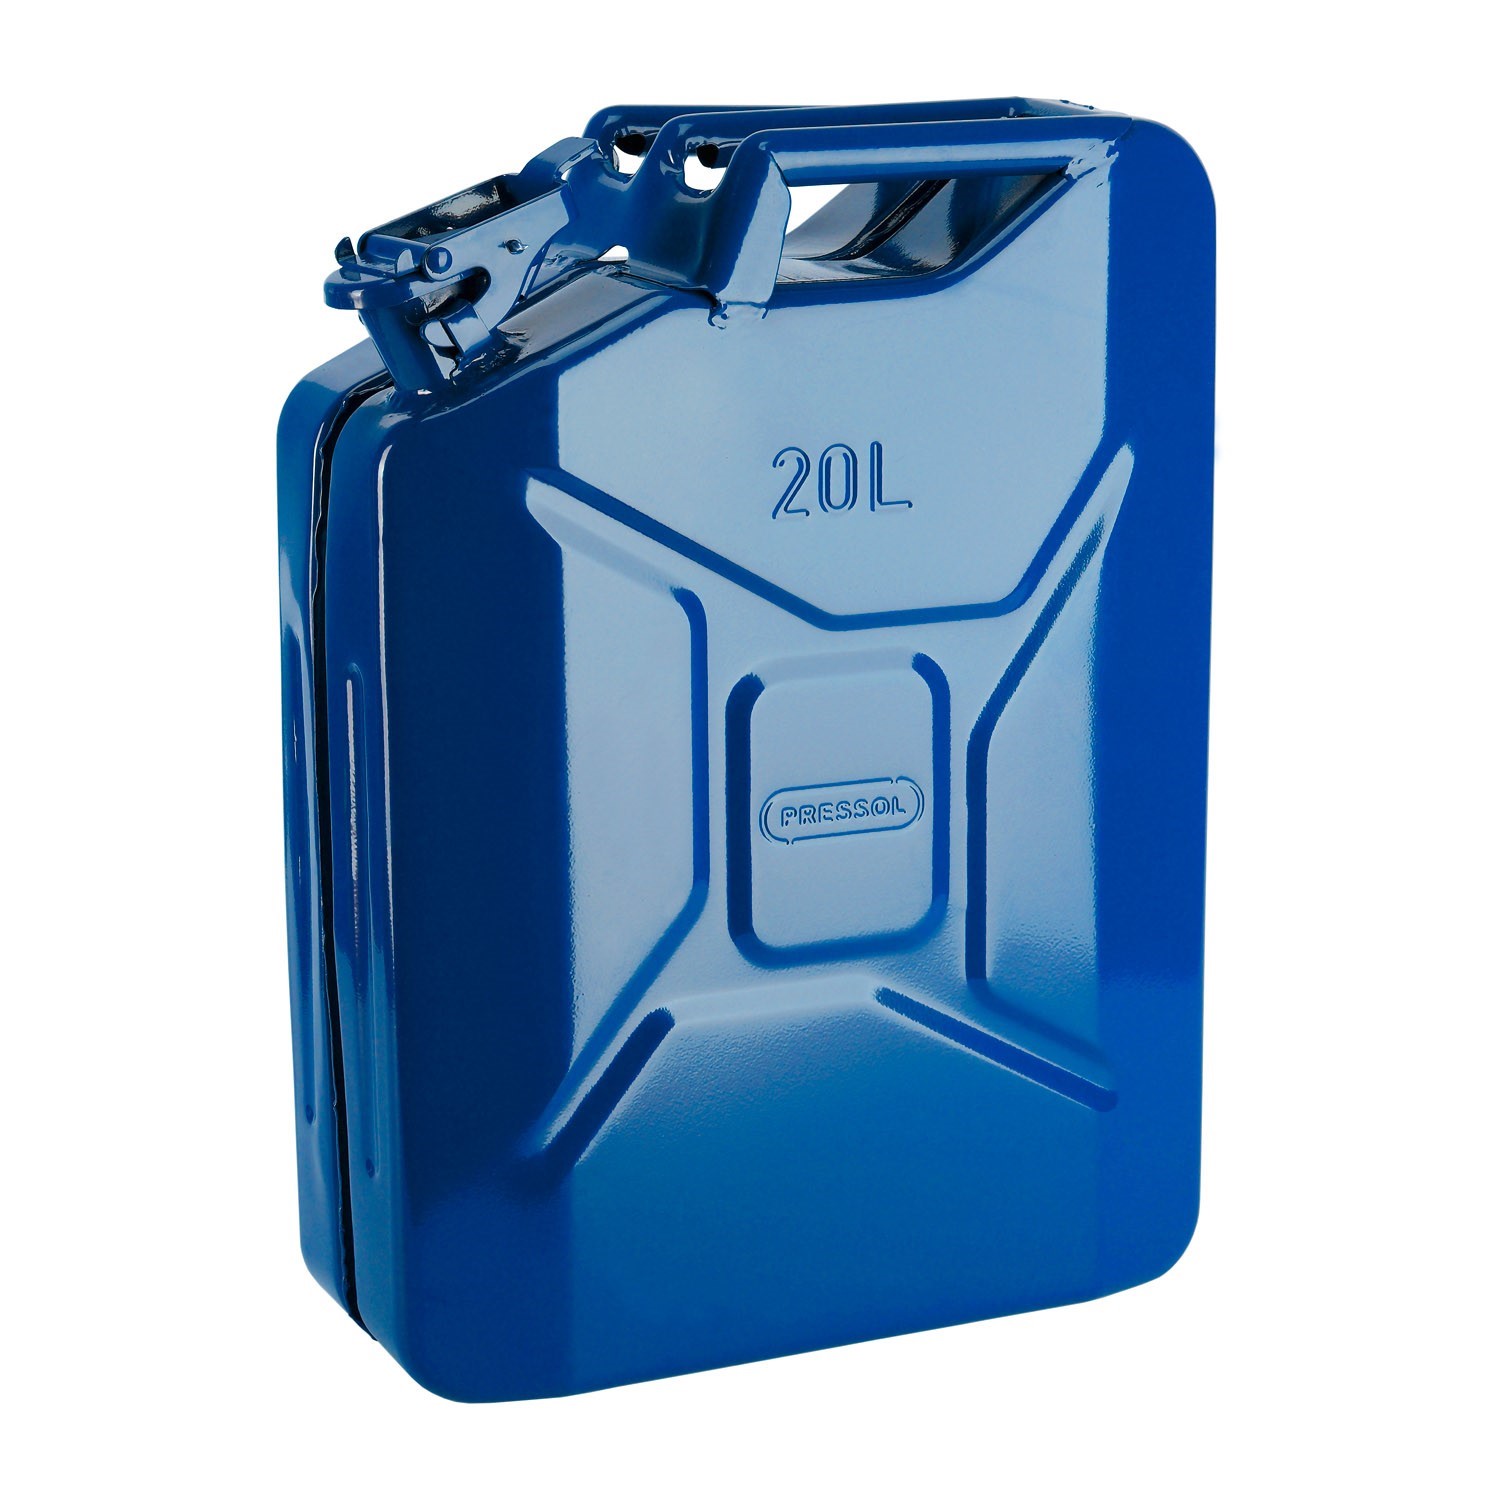 Kraftstoffkanister-20 l, Metall-blau, Nr. 21060959 | Werkzeugonline24